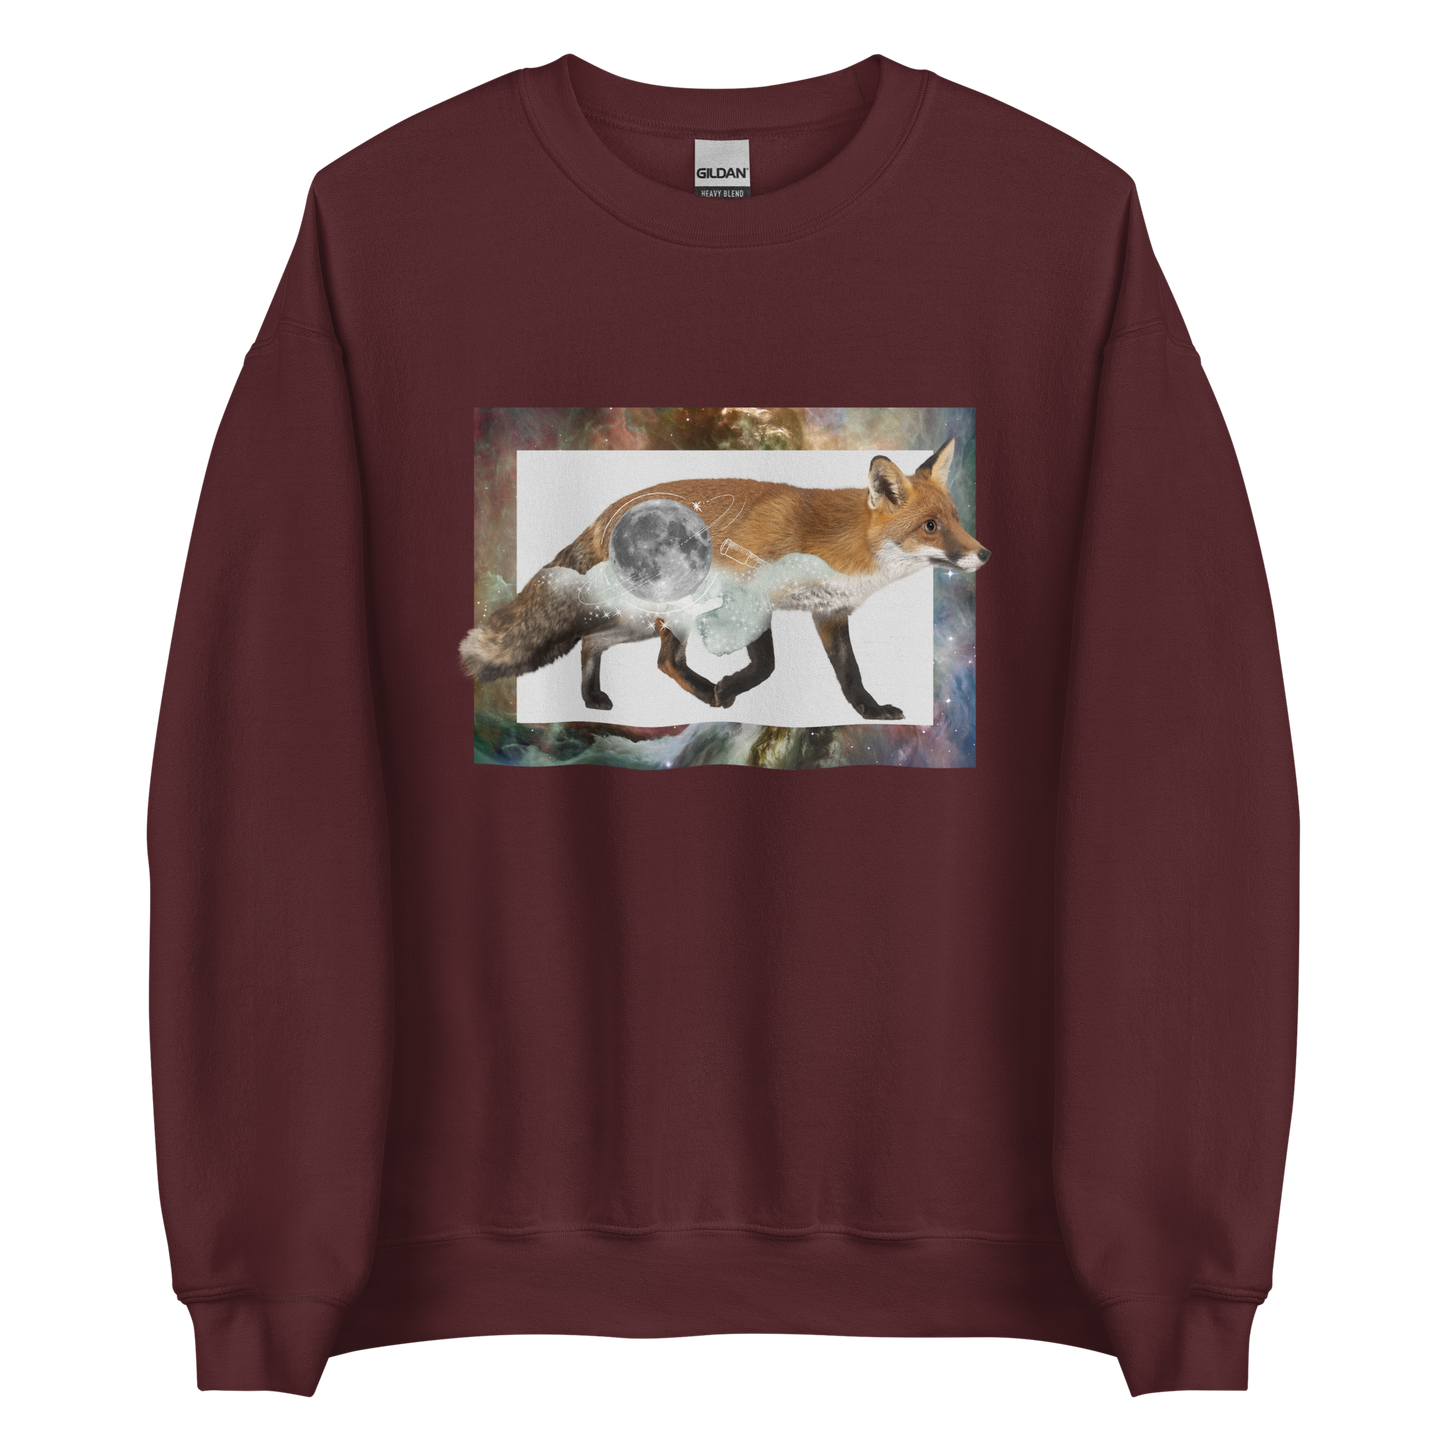 Maroon Fox Sweatshirt featuring an eye-catching Space Fox graphic on the chest - Cool Graphic Fox Sweatshirts - Boozy Fox